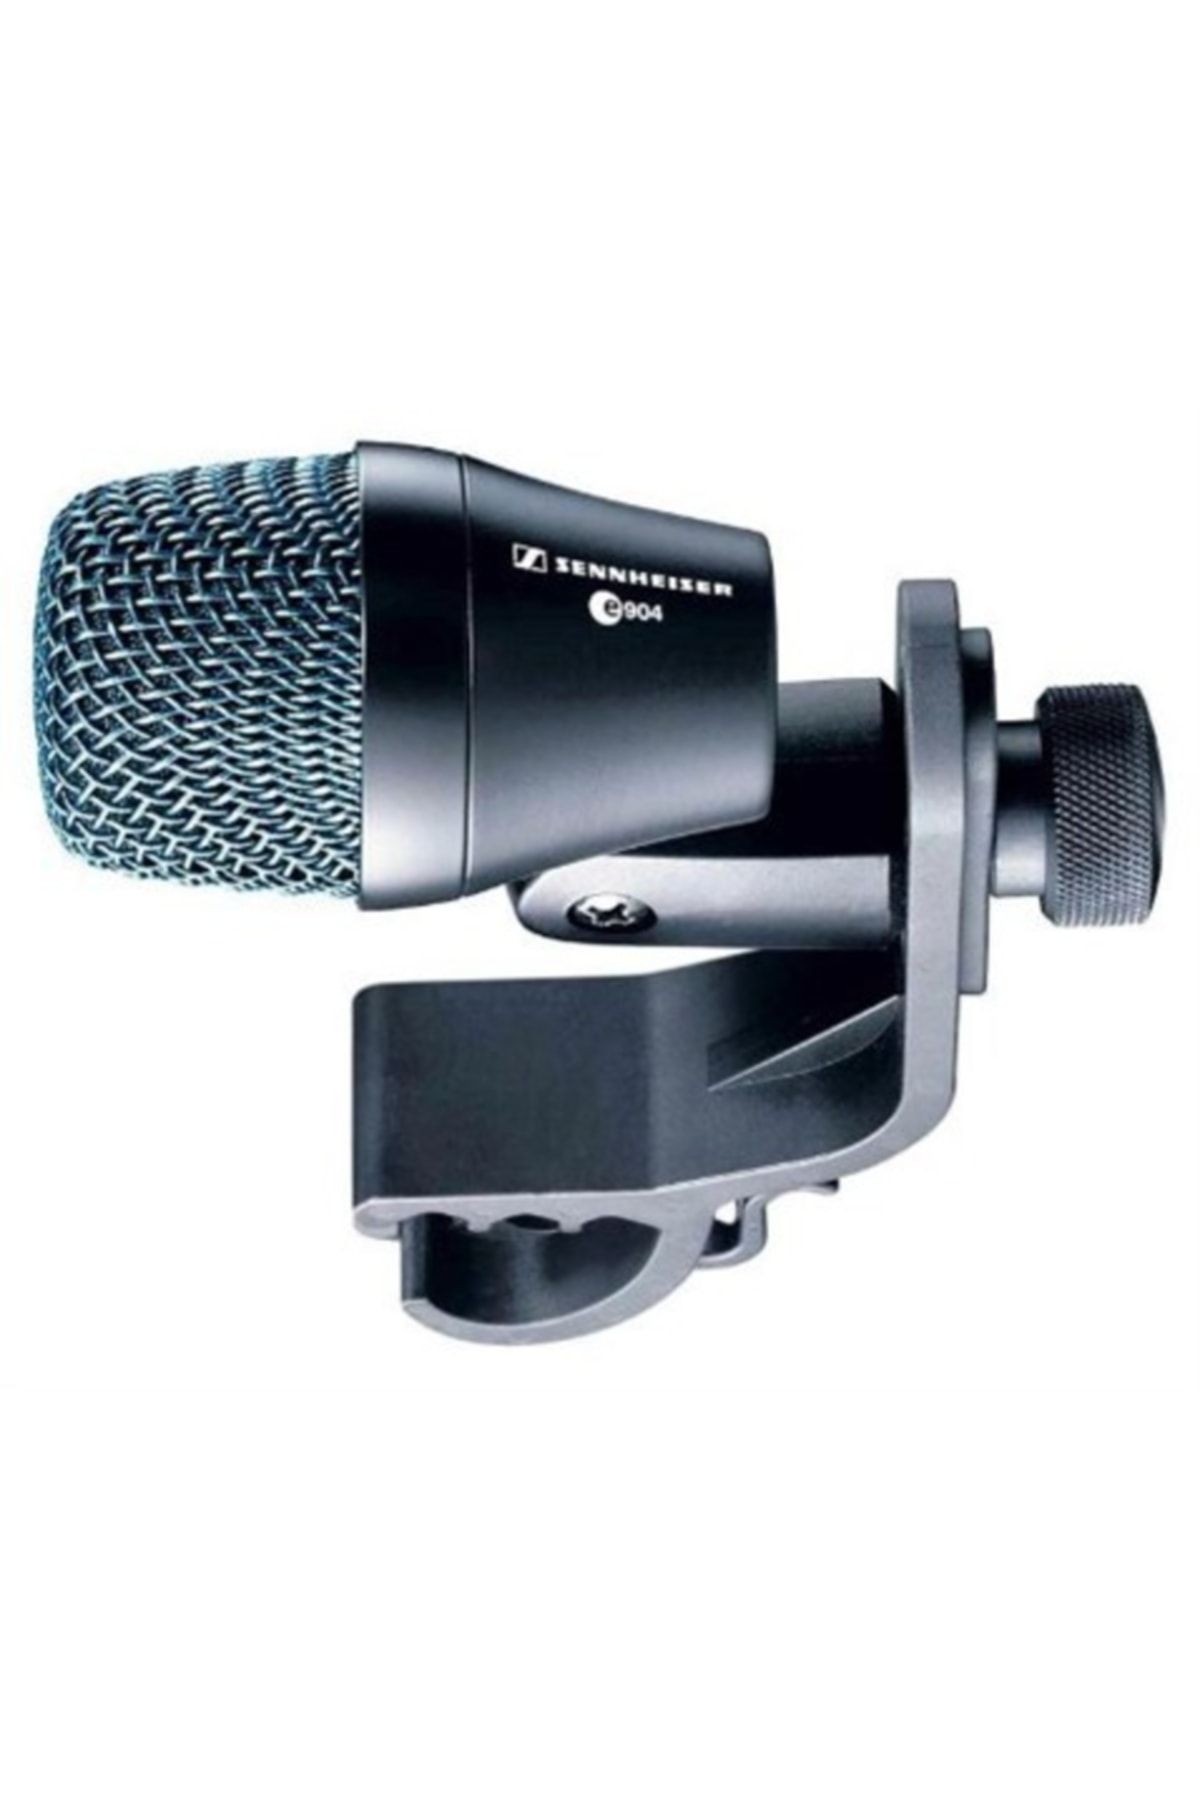 Sennheiser E 904 Dinamik Kardioid Enstruman Mikrofonu